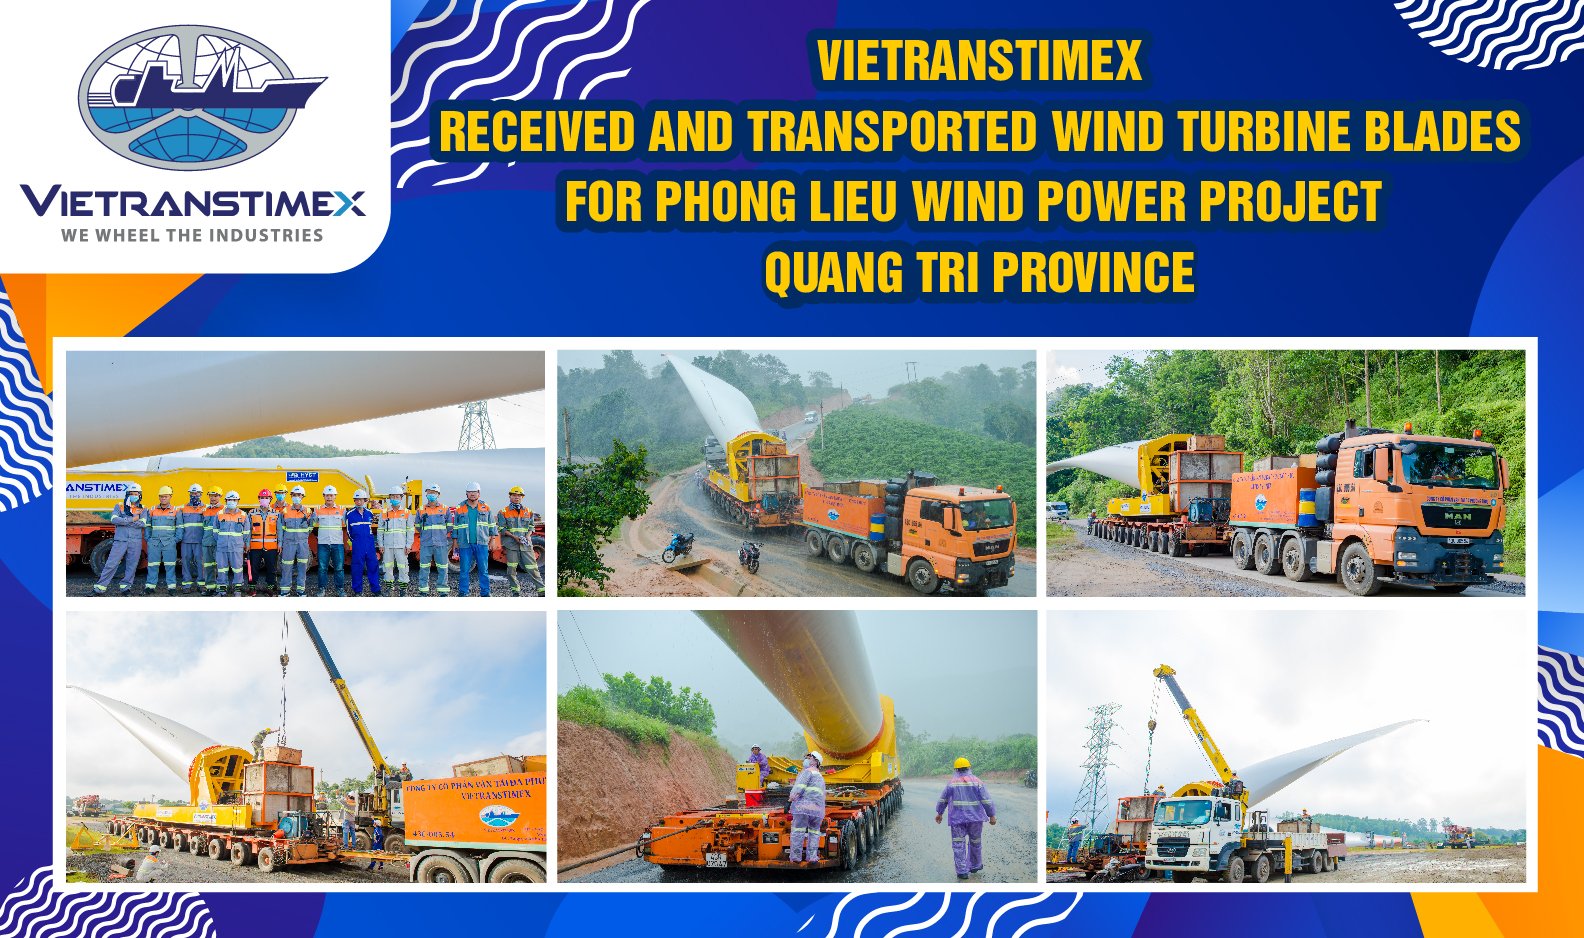 Phong Lieu Wind Power Project – Quang Trị Province